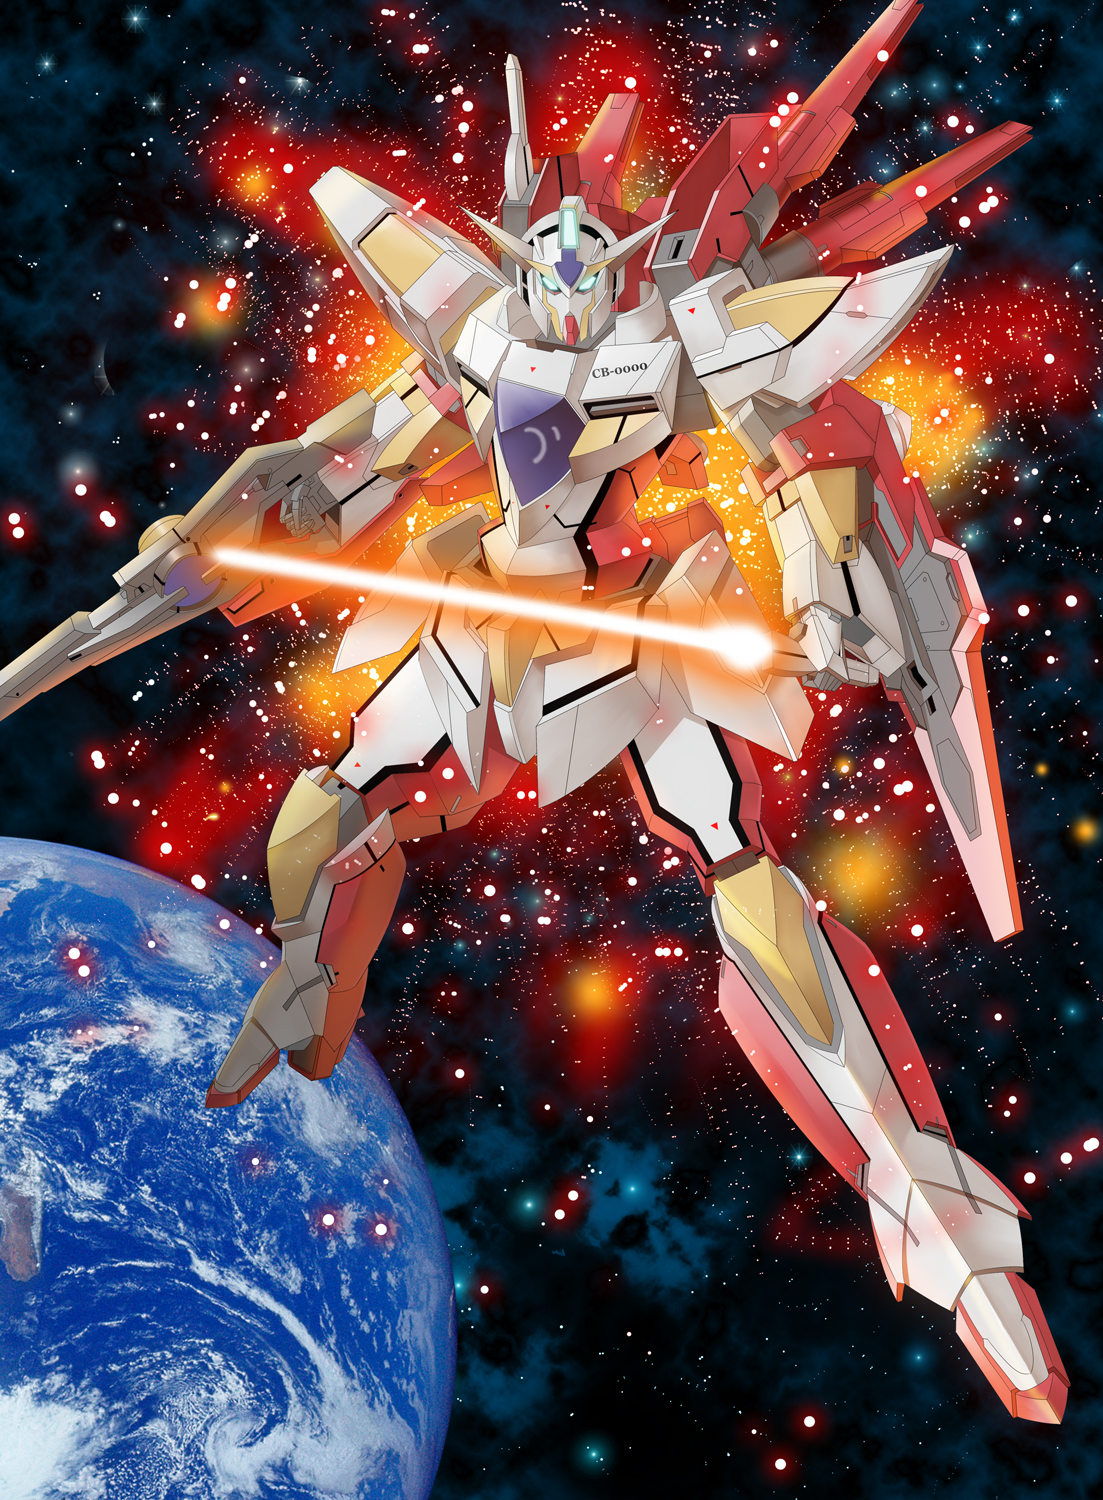 Anime 1103x1500 anime mechs Gundam Super Robot Taisen Reborns Gundam Mobile Suit Gundam 00 artwork digital art fan art Pixiv